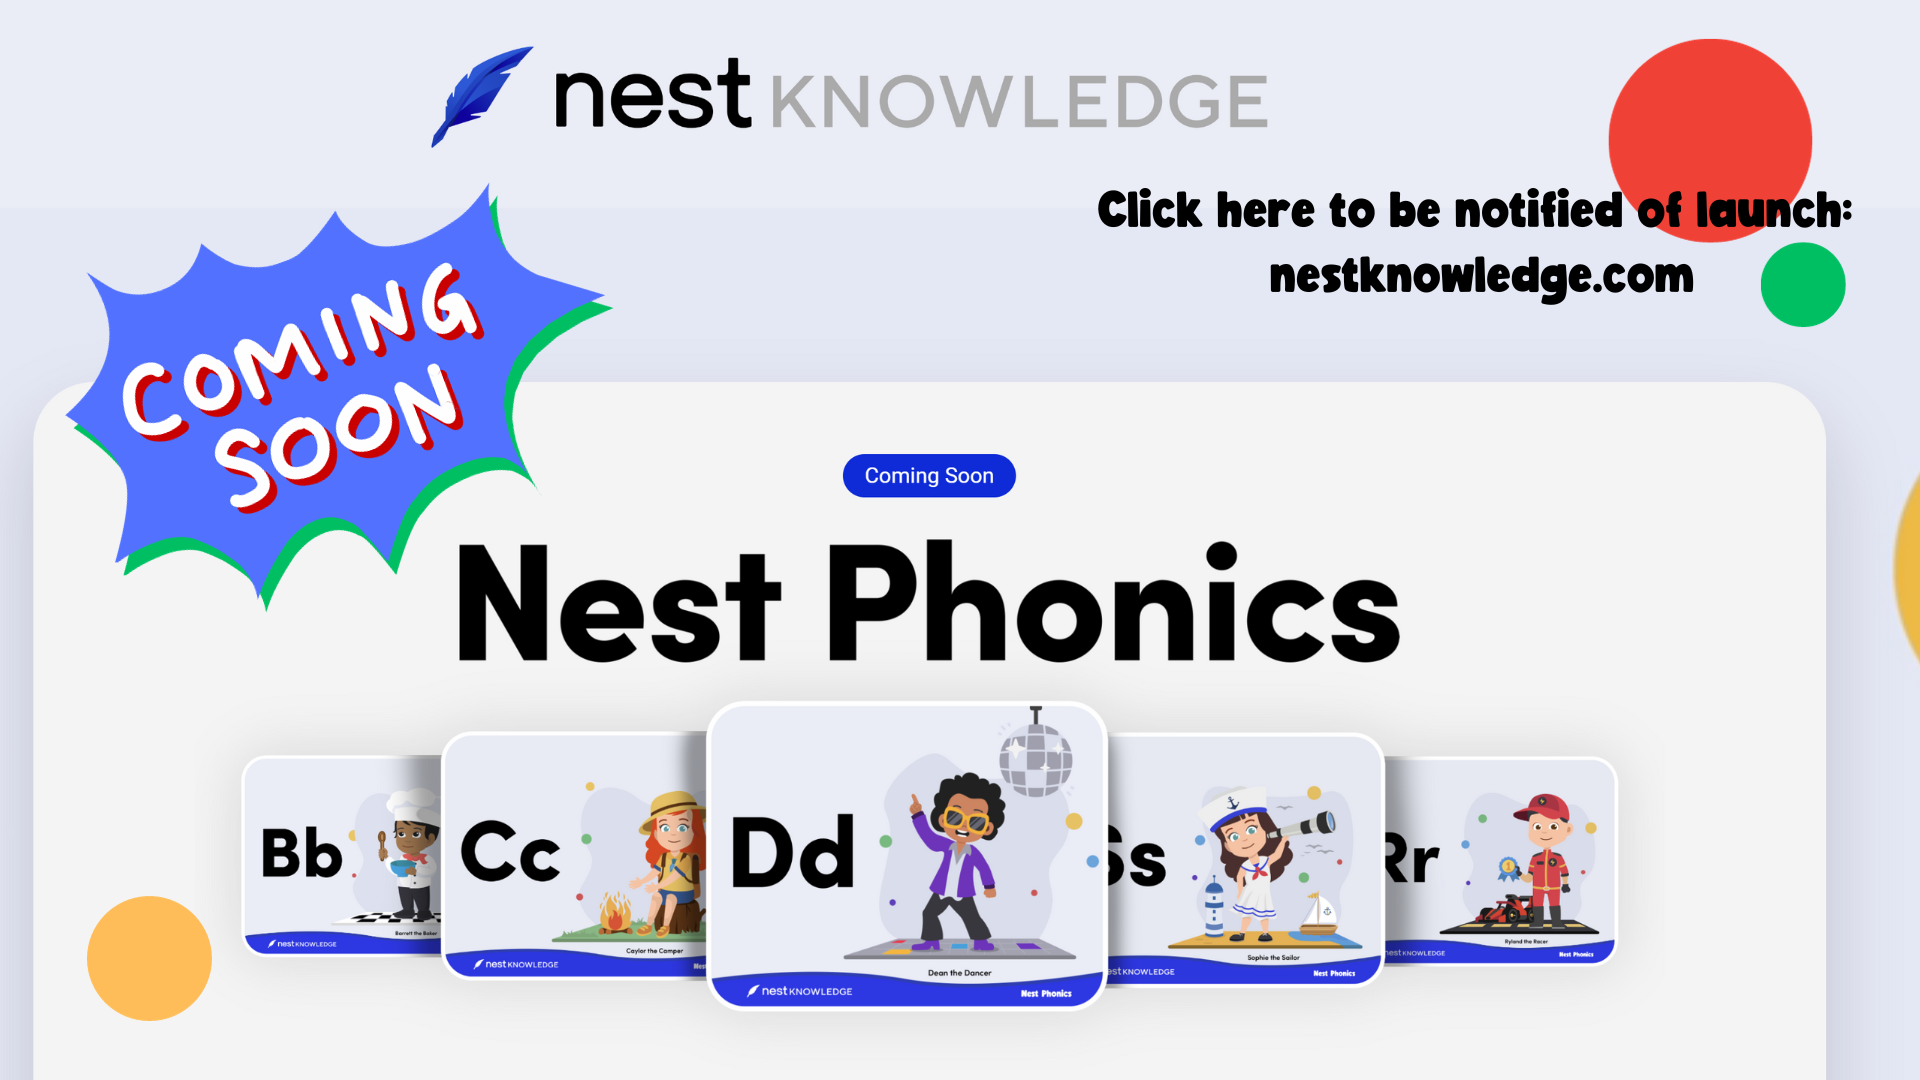 Nest School is the Exclusive Home of Nest Phonics